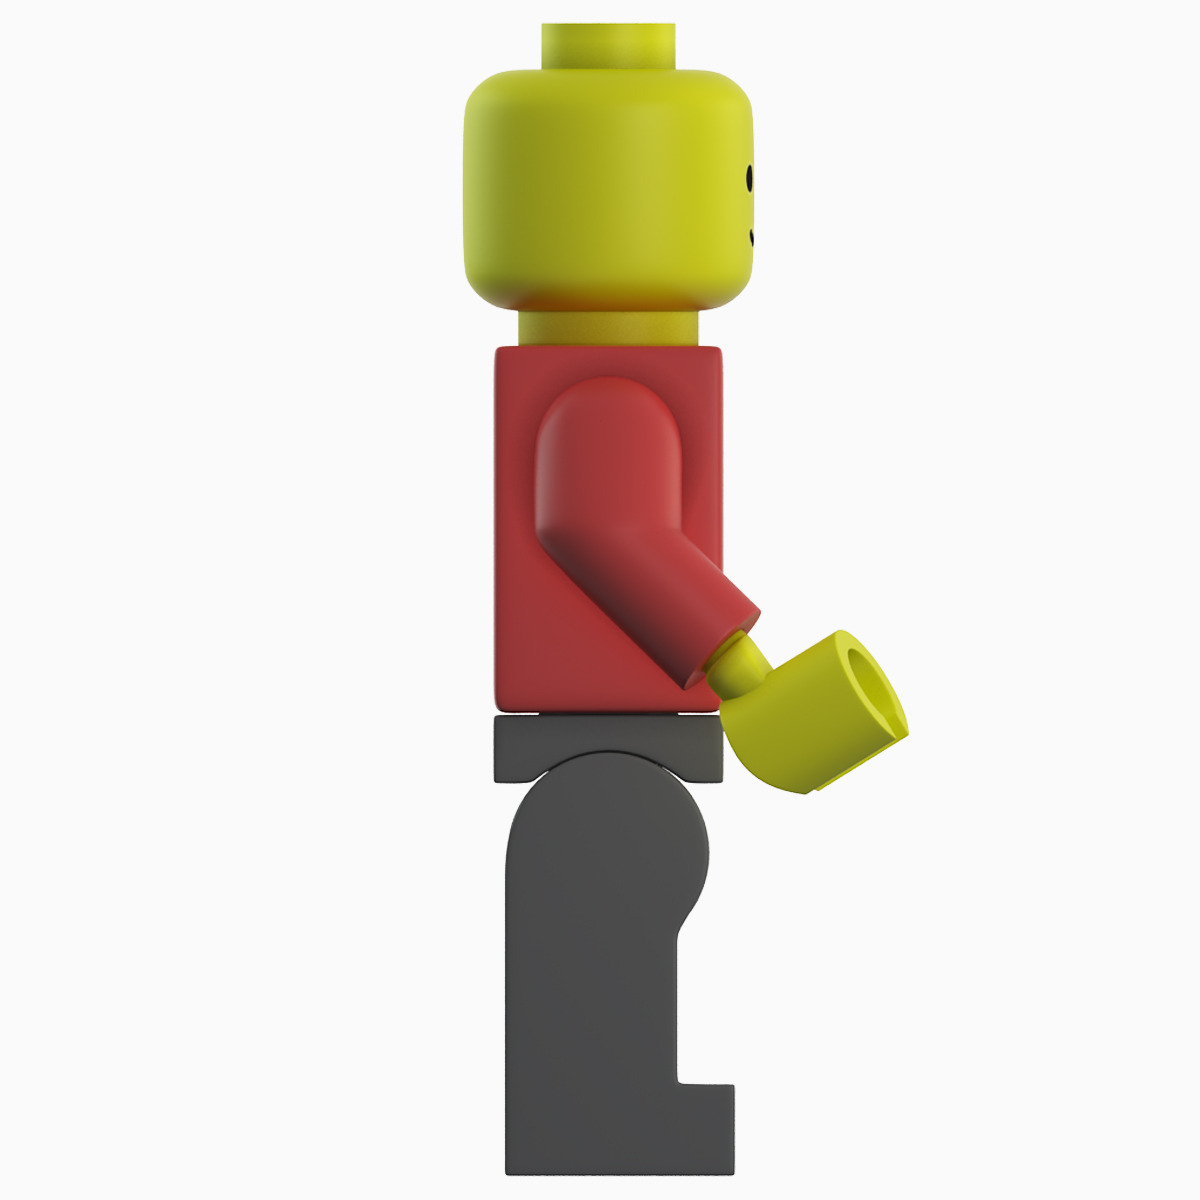 download free virtual lego minifig